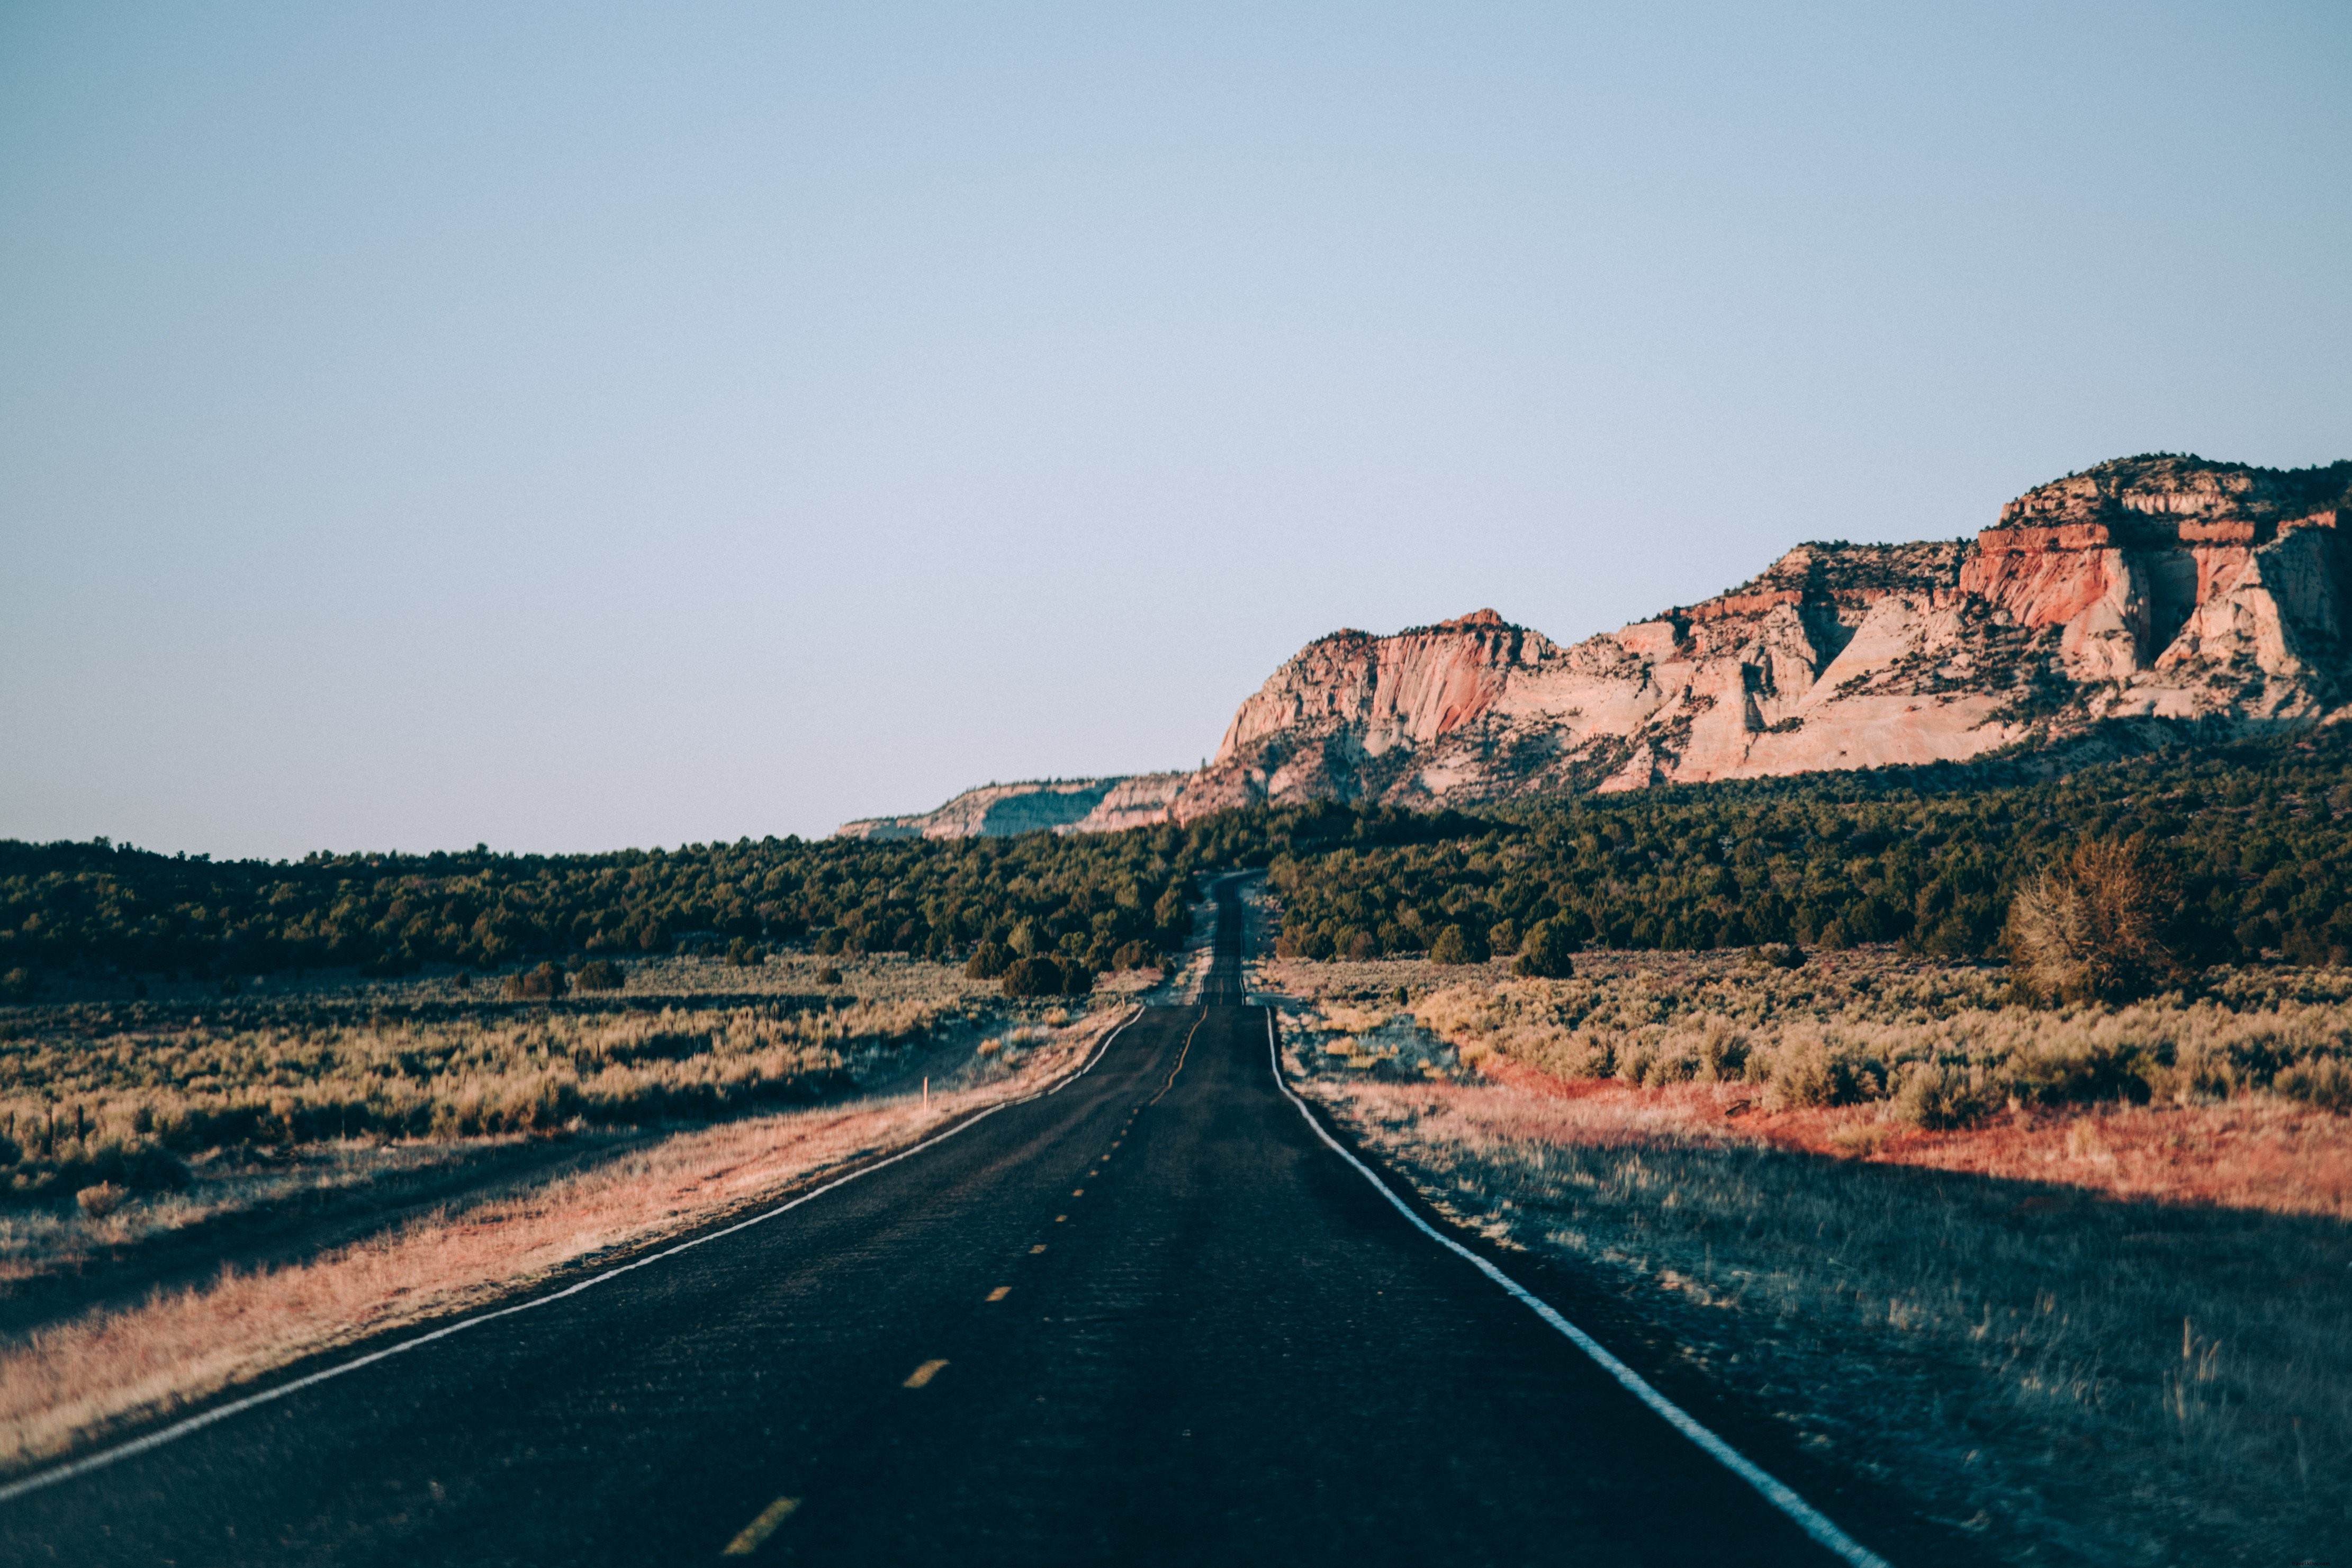 Foto de la autopista del desierto americano